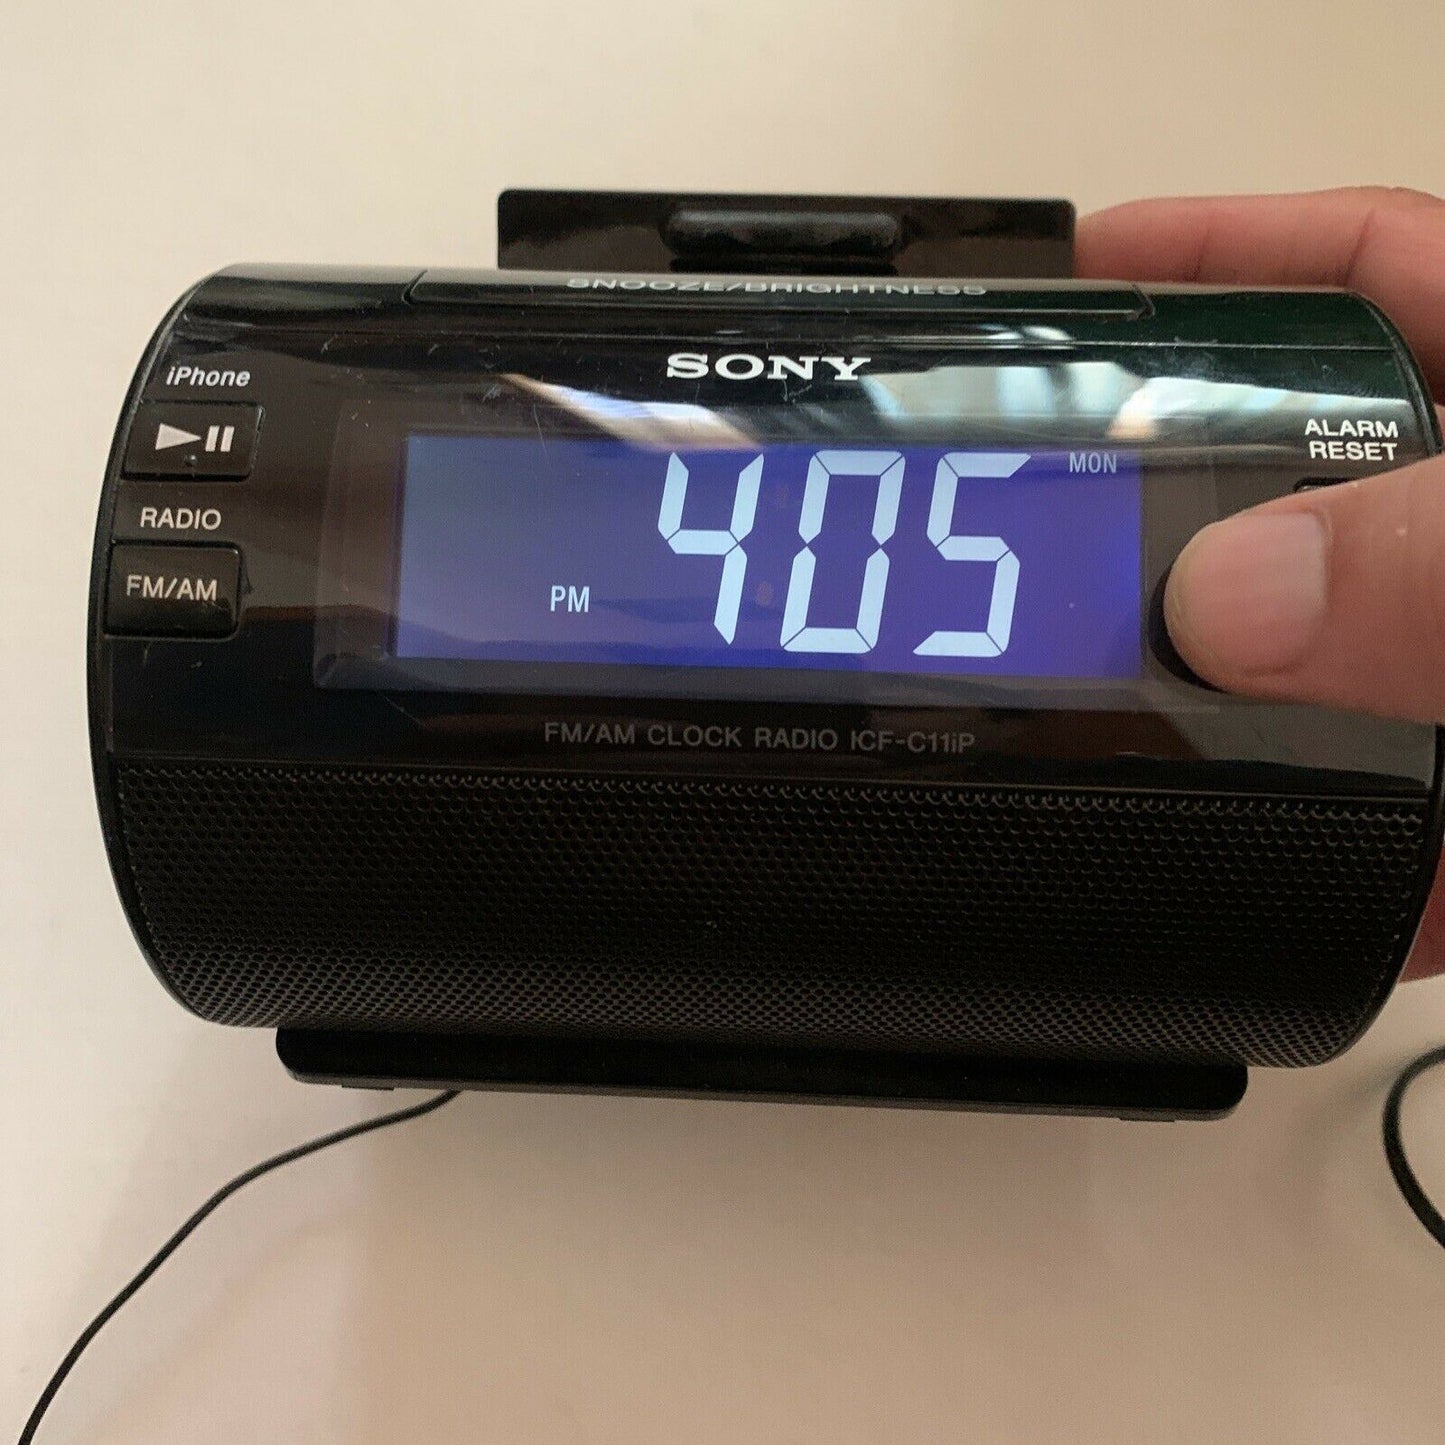 Sony ICF-C11iP AM/FM Clock Radio With iPhone Lightning Port